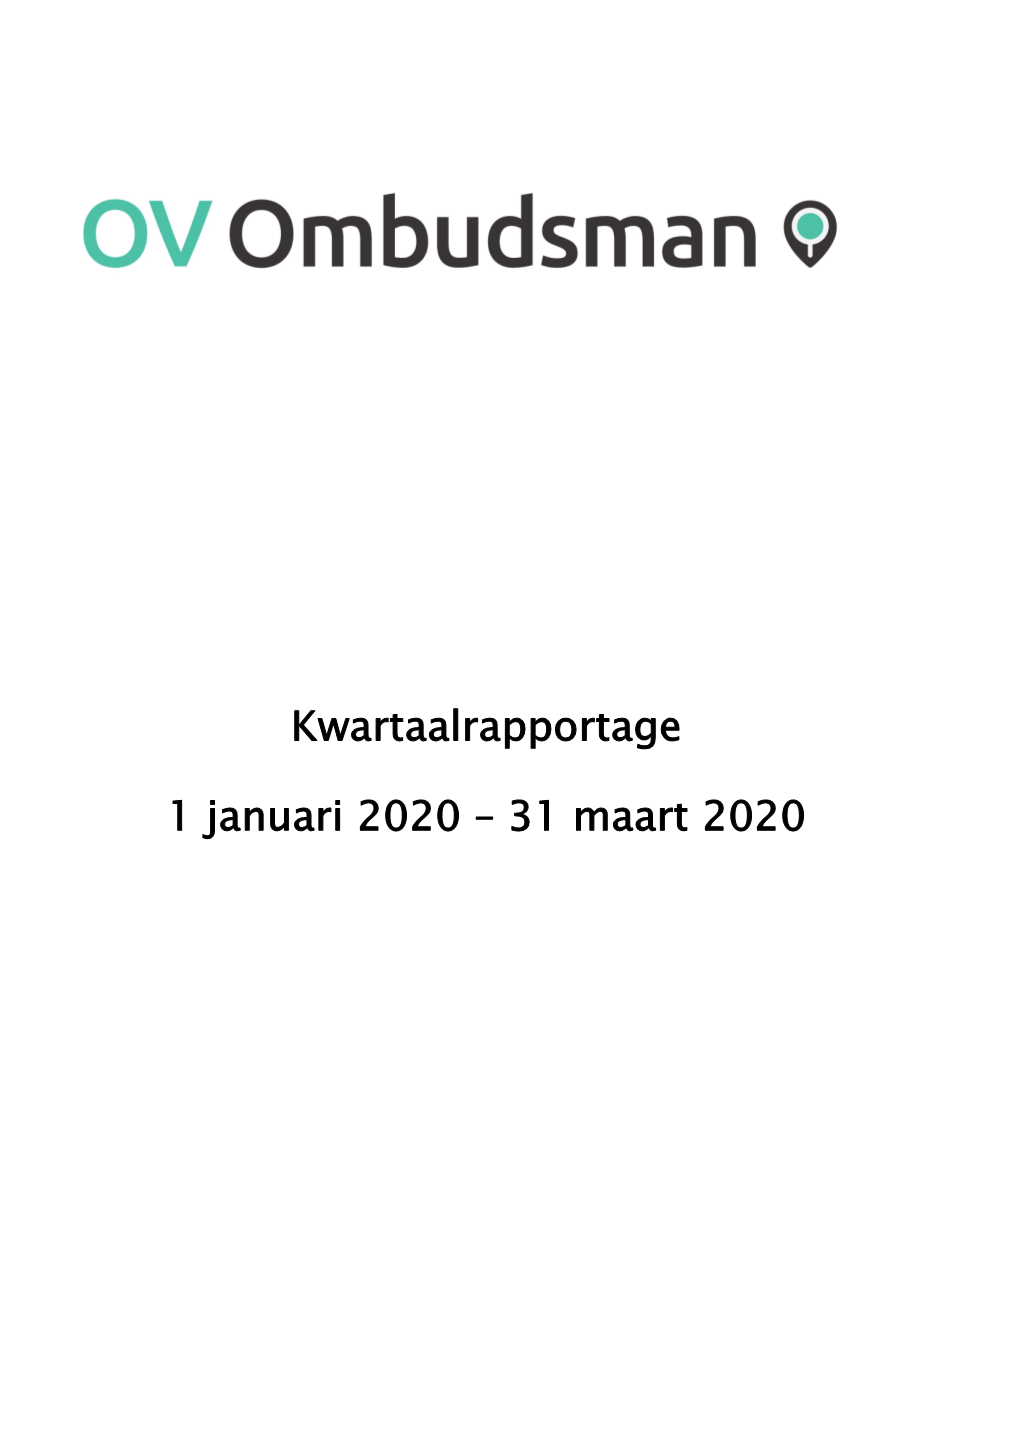 Kwartaalrapportage OV Ombudsman Eerste Kwartaal 2020